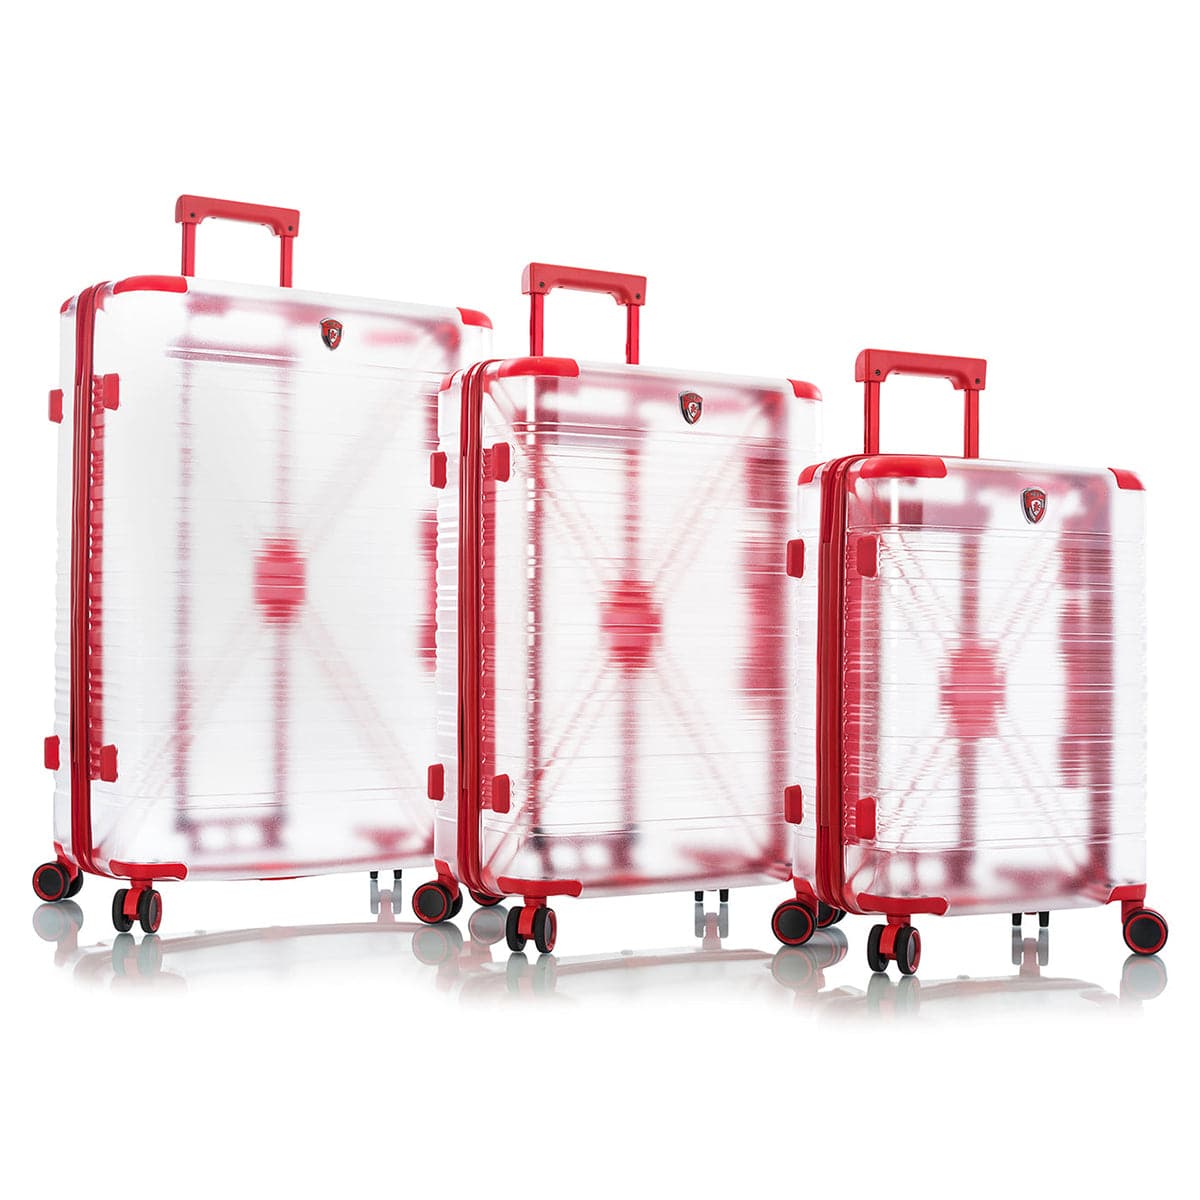 Heys X-Ray 3 Piece Spinner Luggage Set